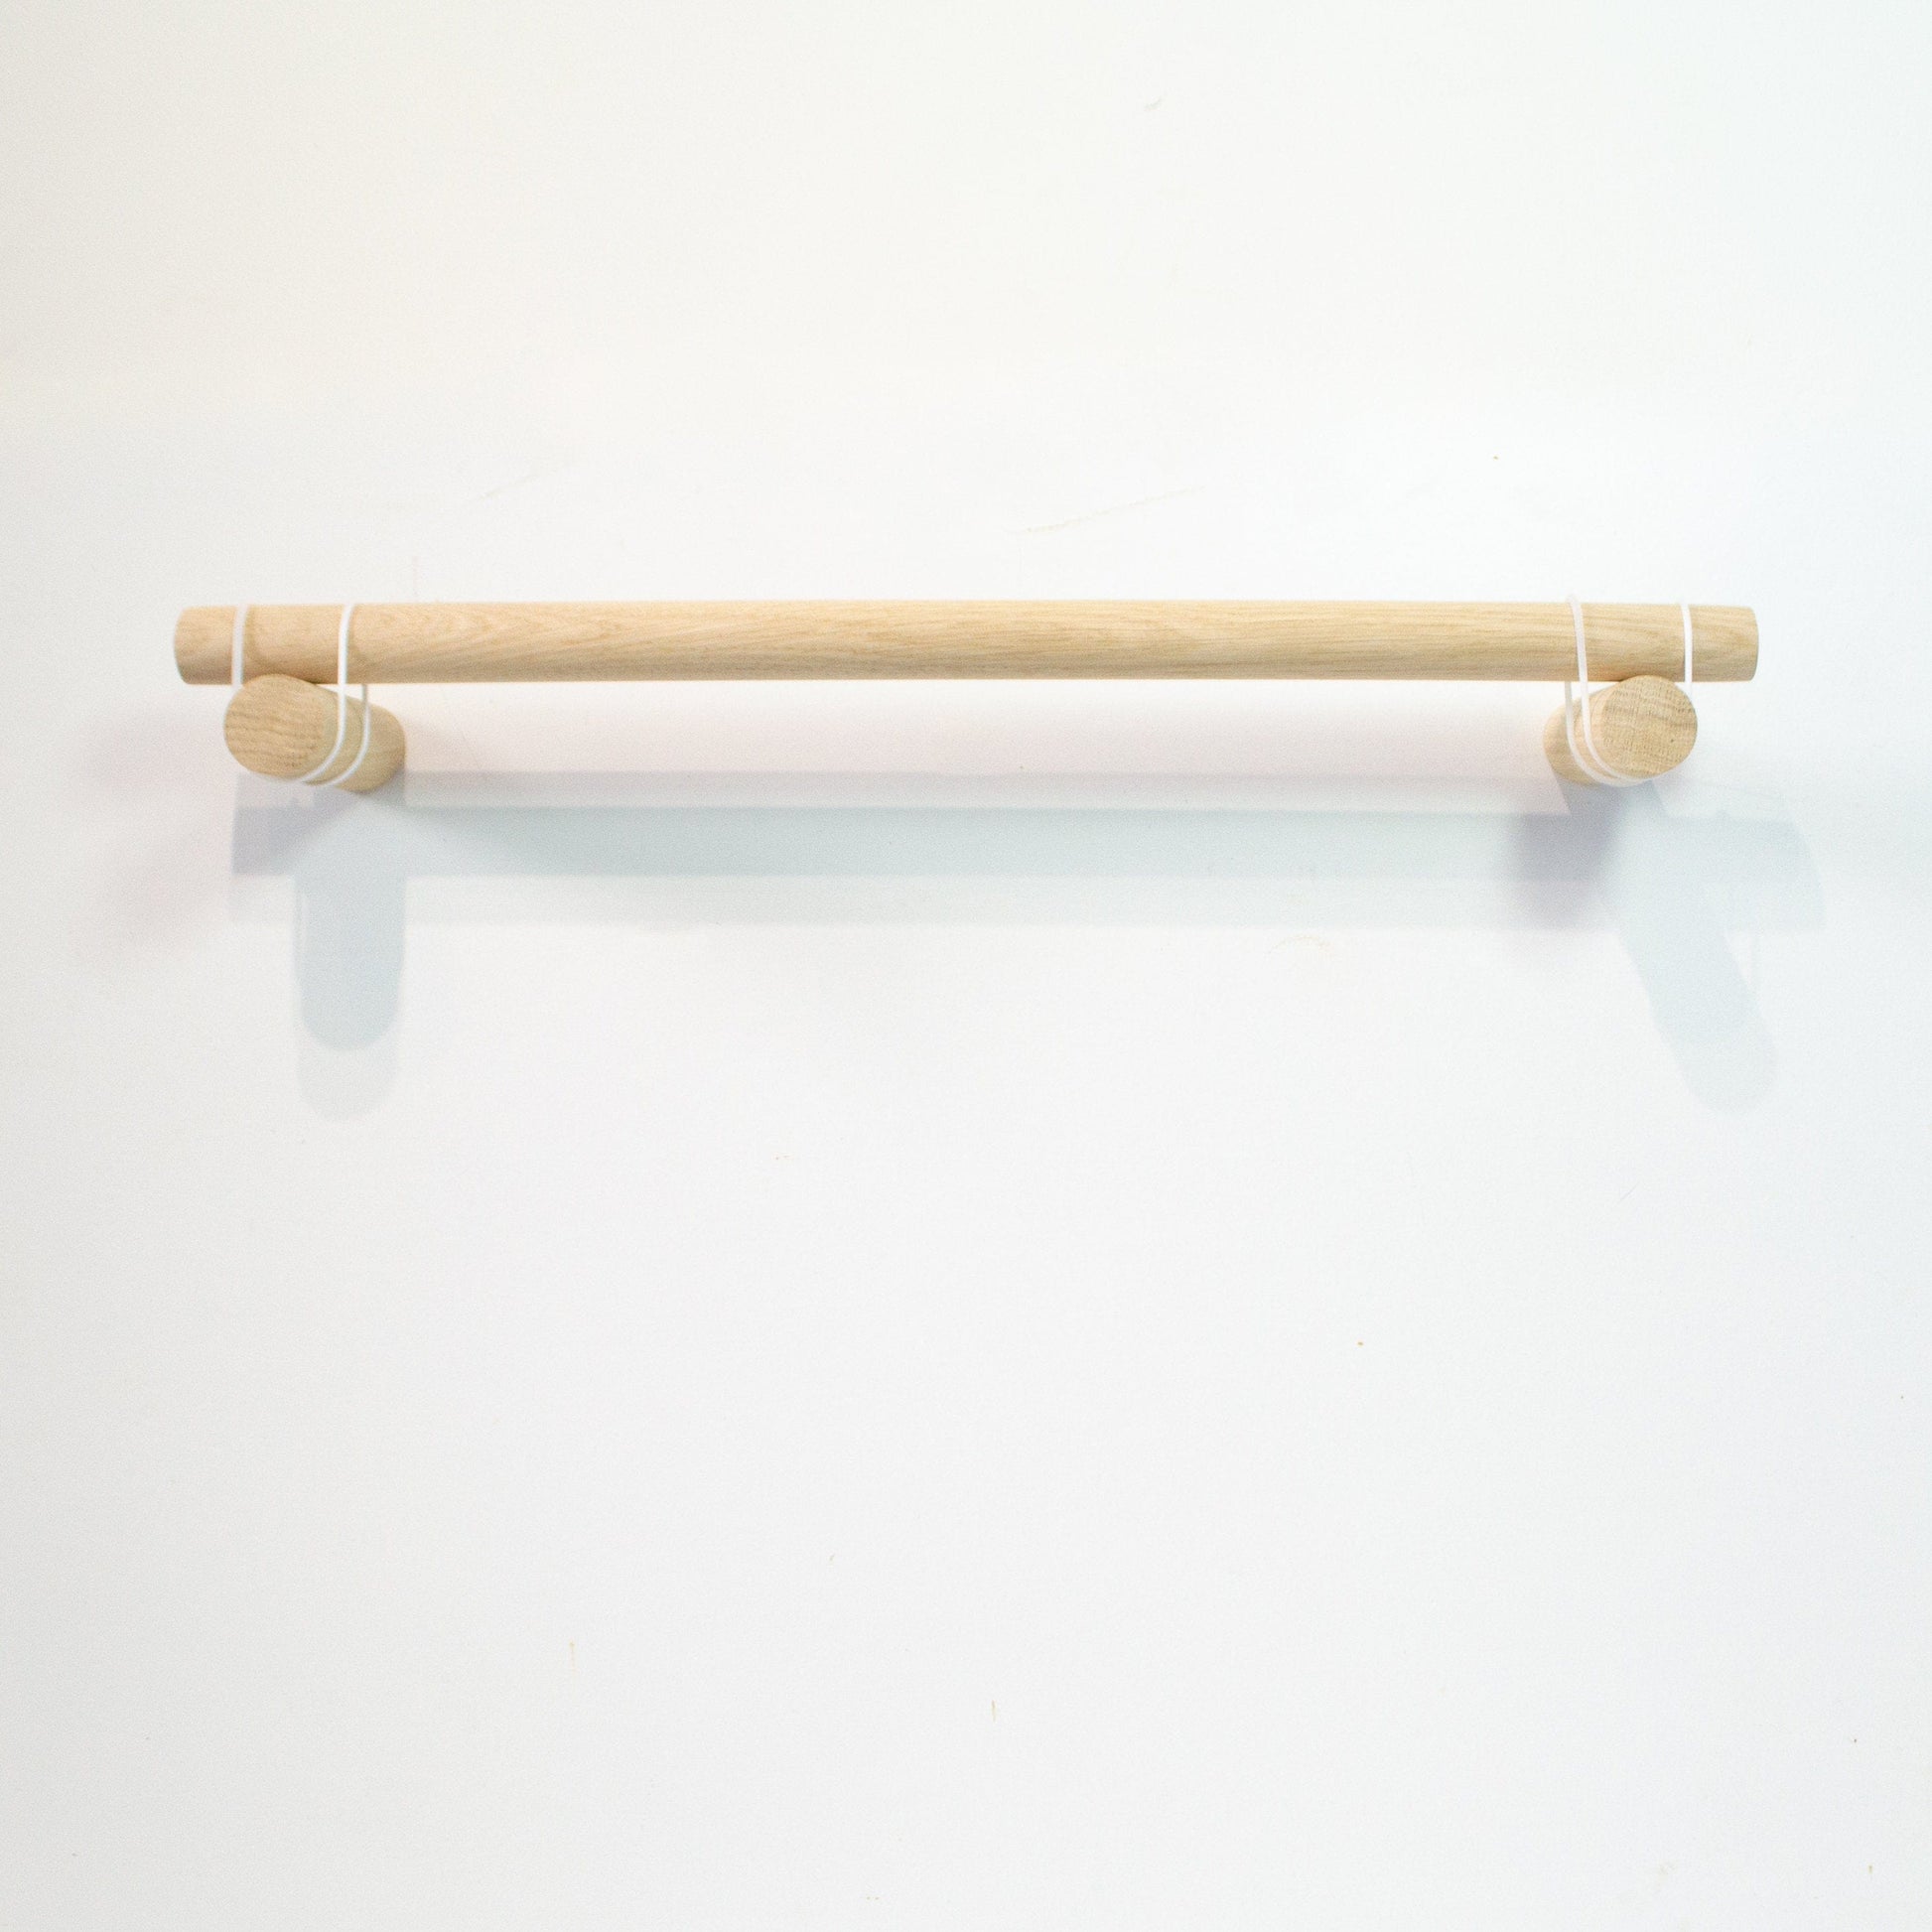 Wooden Towel Rail for Bathroom or Kitchen Towel Holder